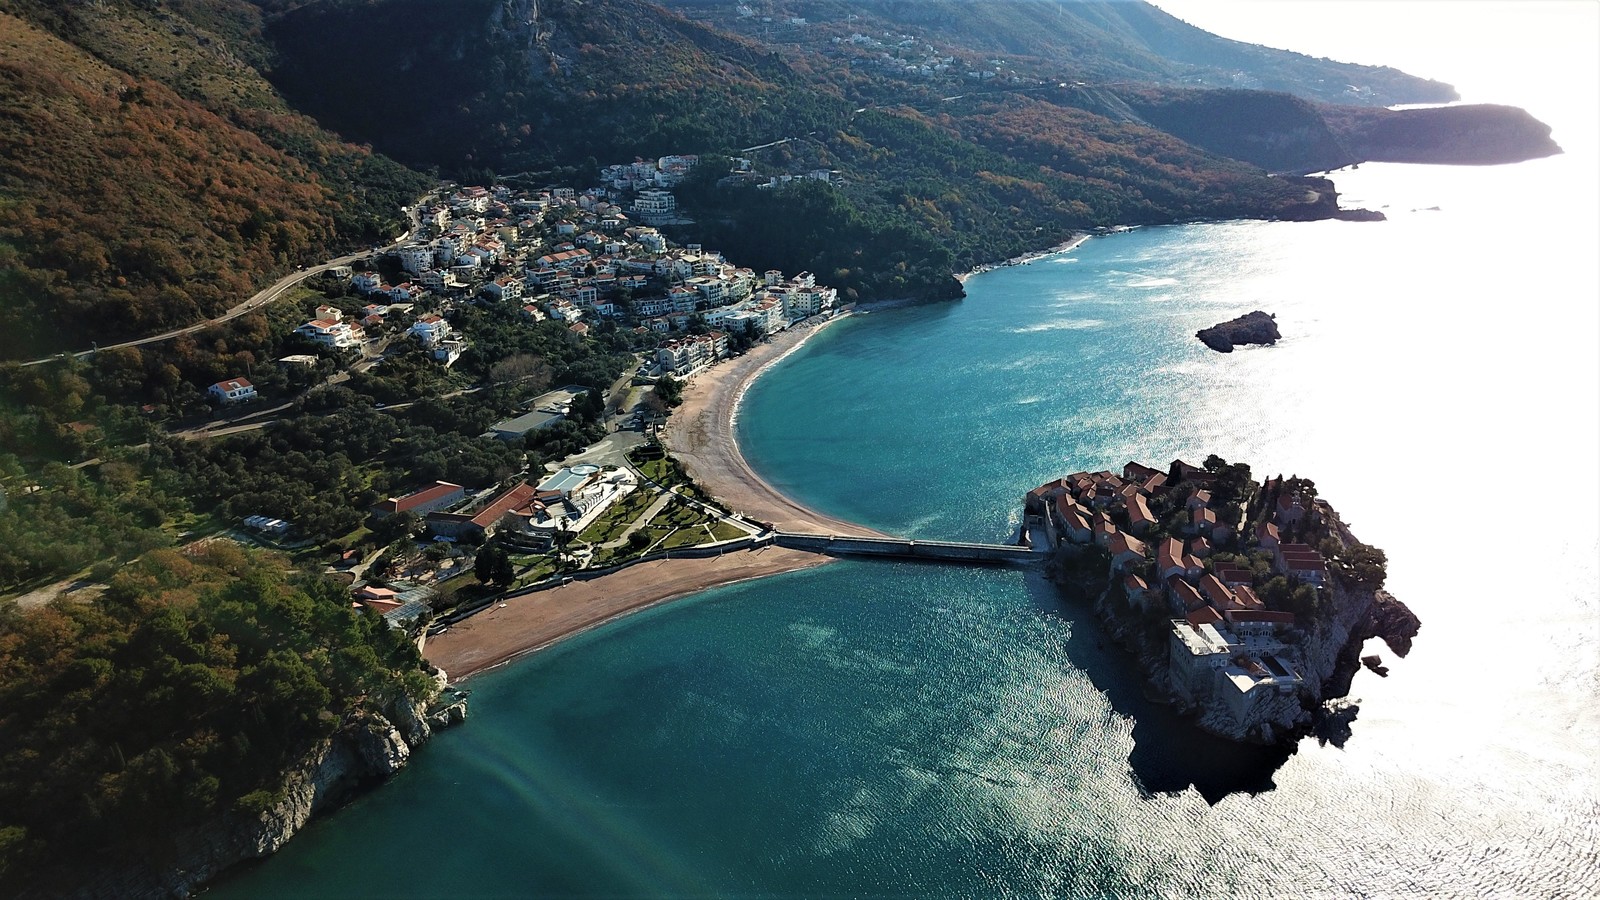 Montenegro, Djurdjevic Bridge, Herceg Novi and Sveti Stefan island - My, Dji, DJI Mavic PRO, DJI Phantom, Montenegro, Montenegro, Bridge, View